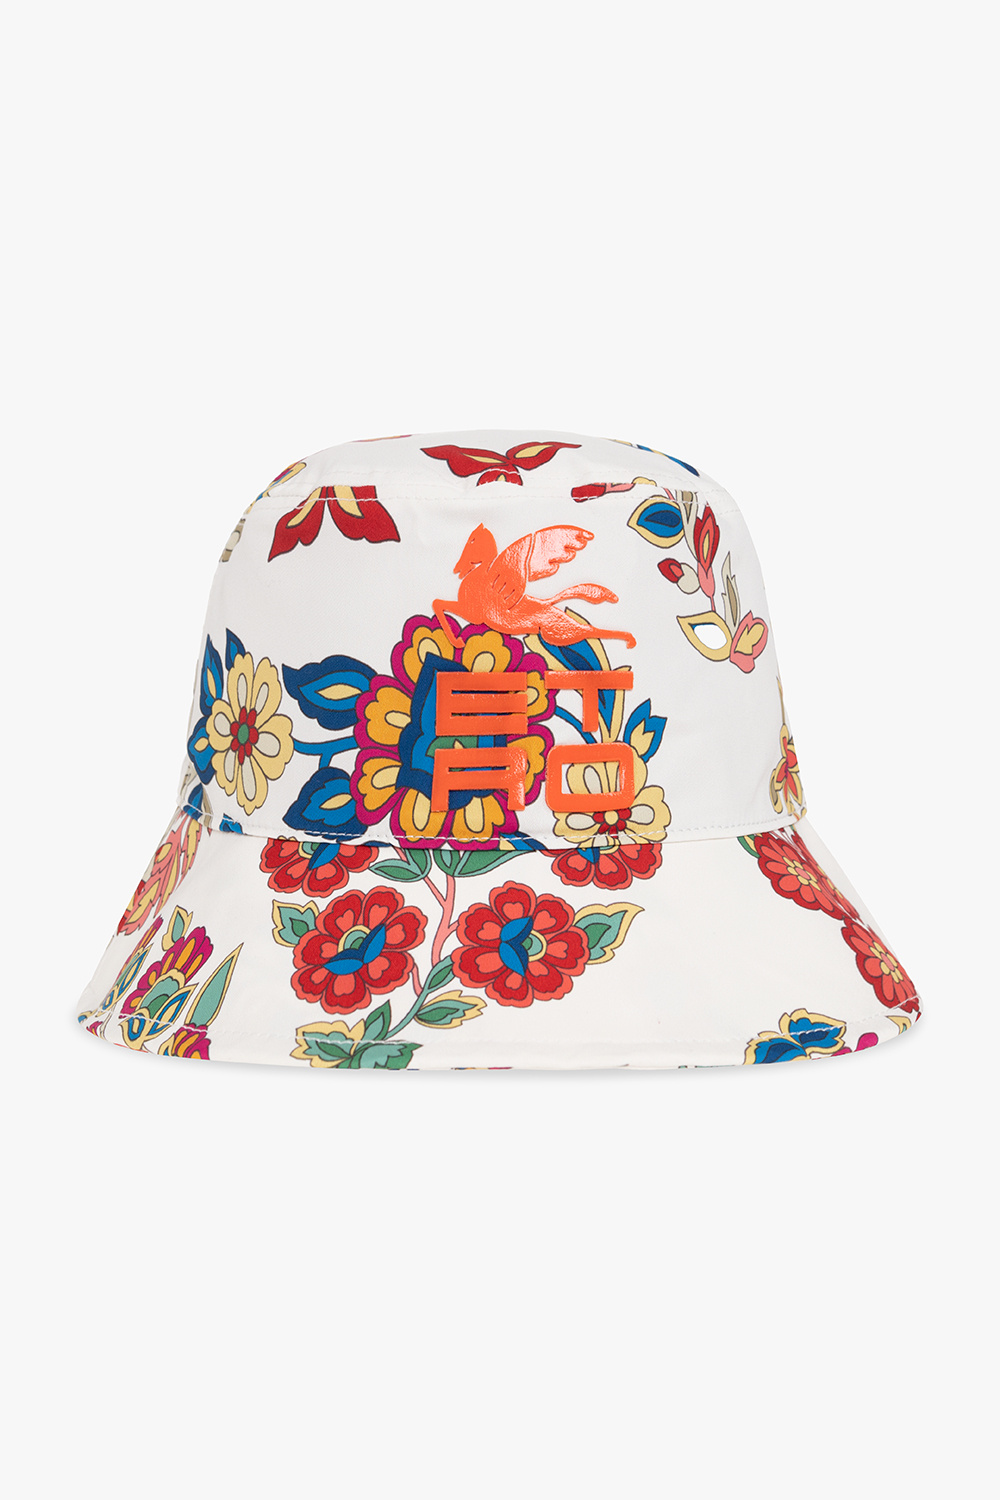 Floral Print Sun Hat -  Canada